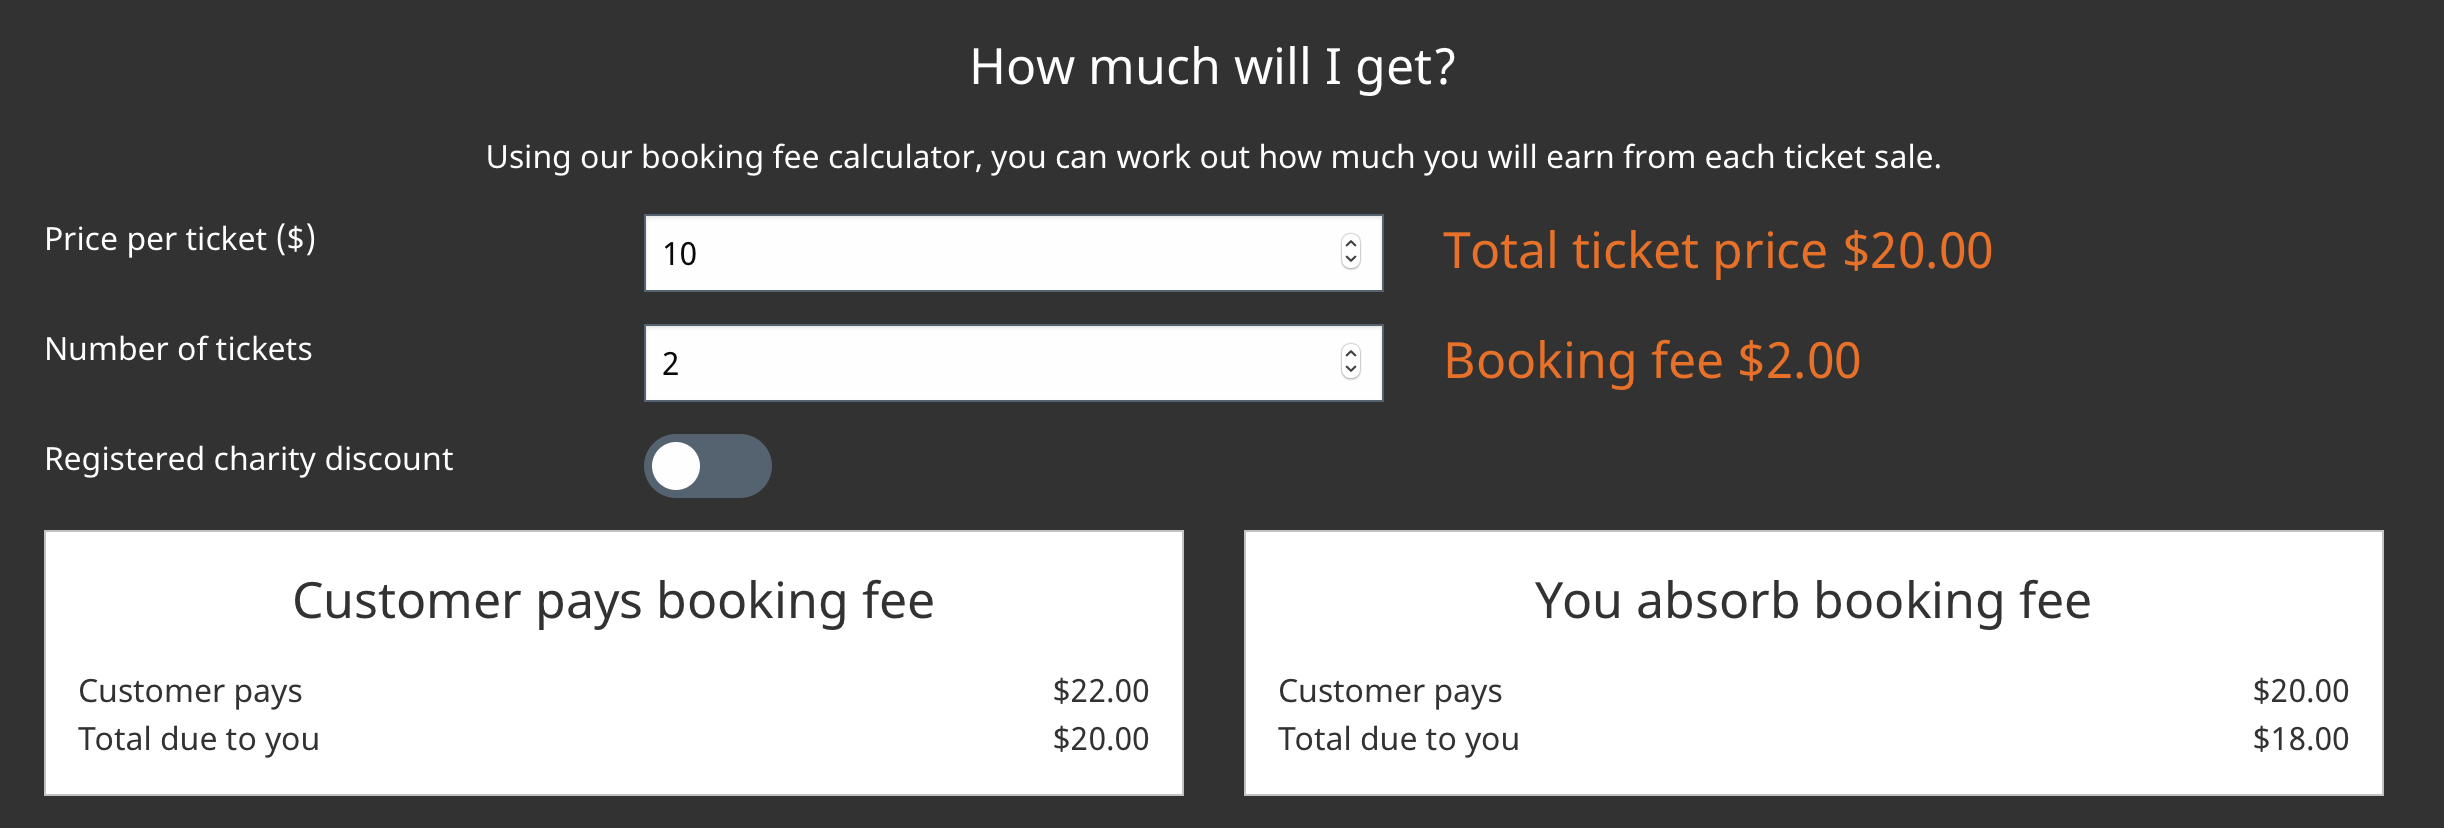 TicketSource booking fee calculator